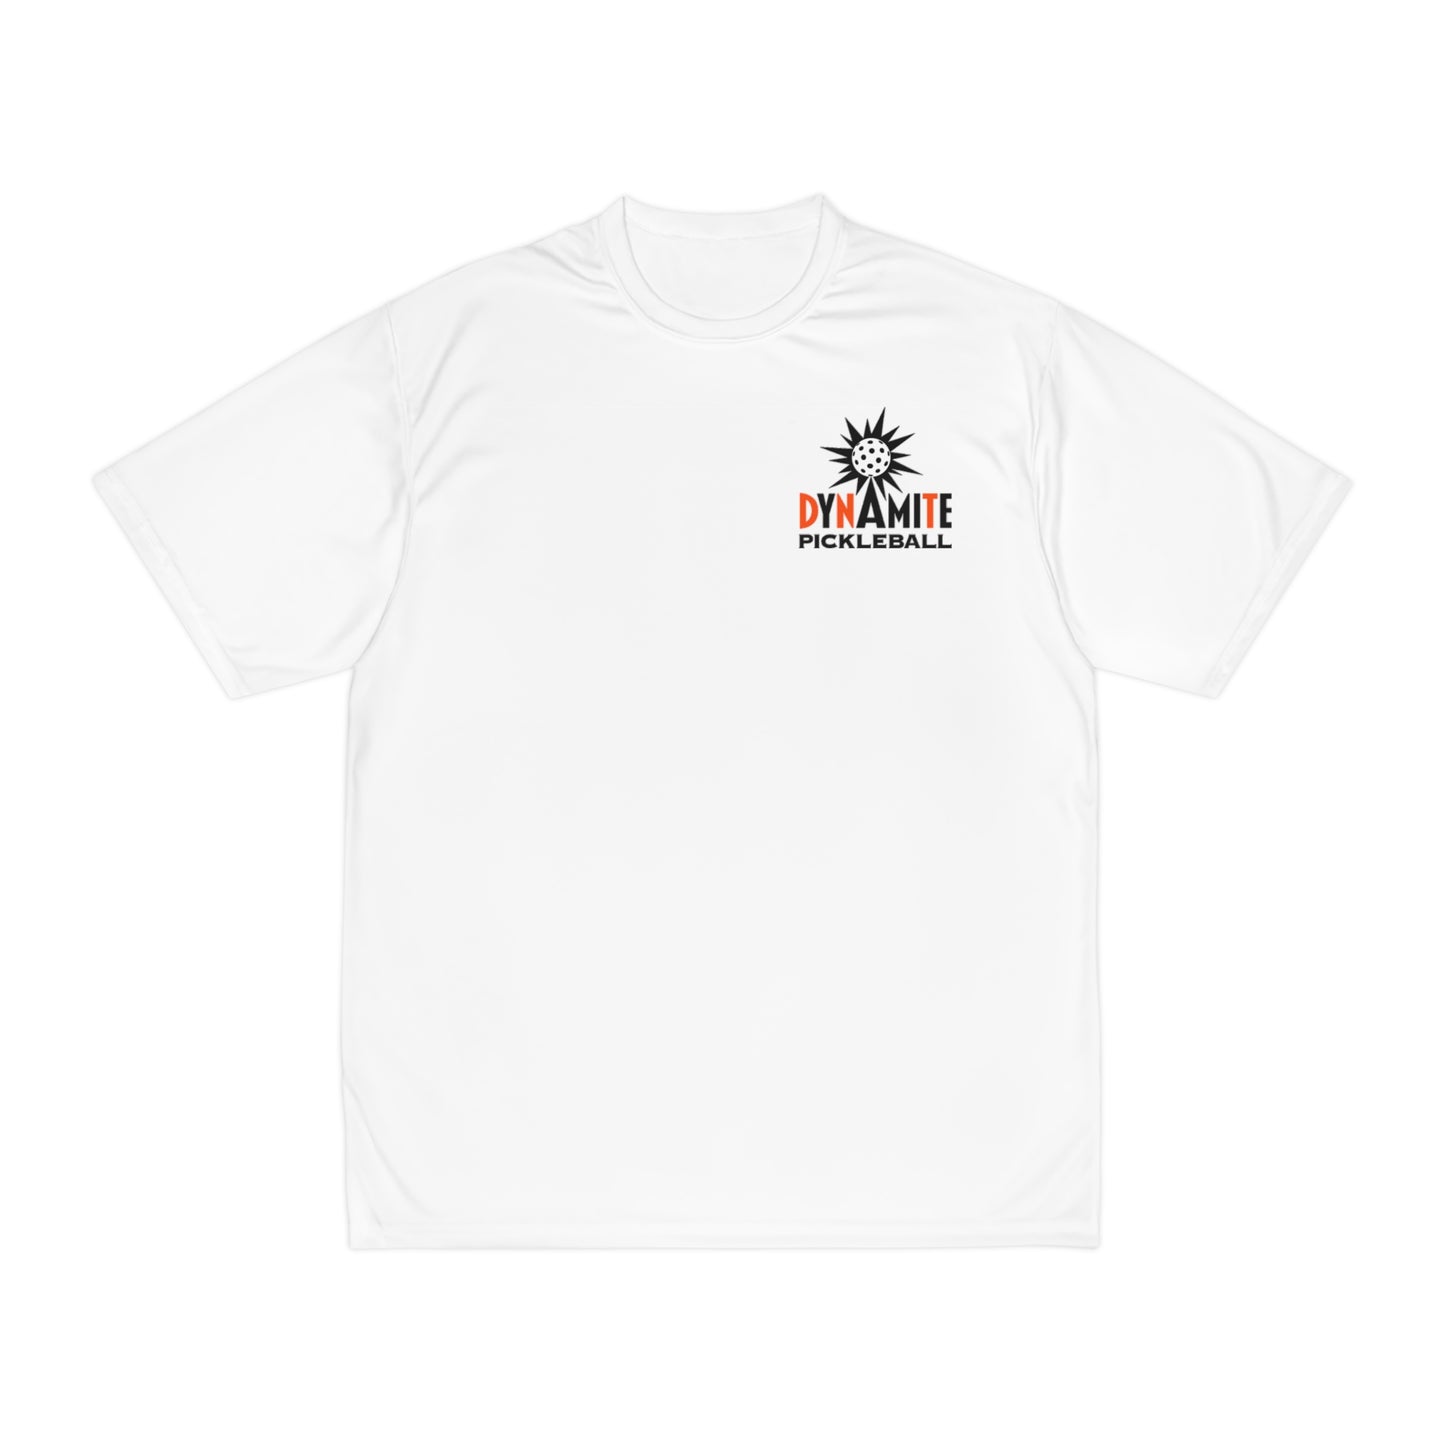 Dynamite Pickleball Men's Performance T-Shirt